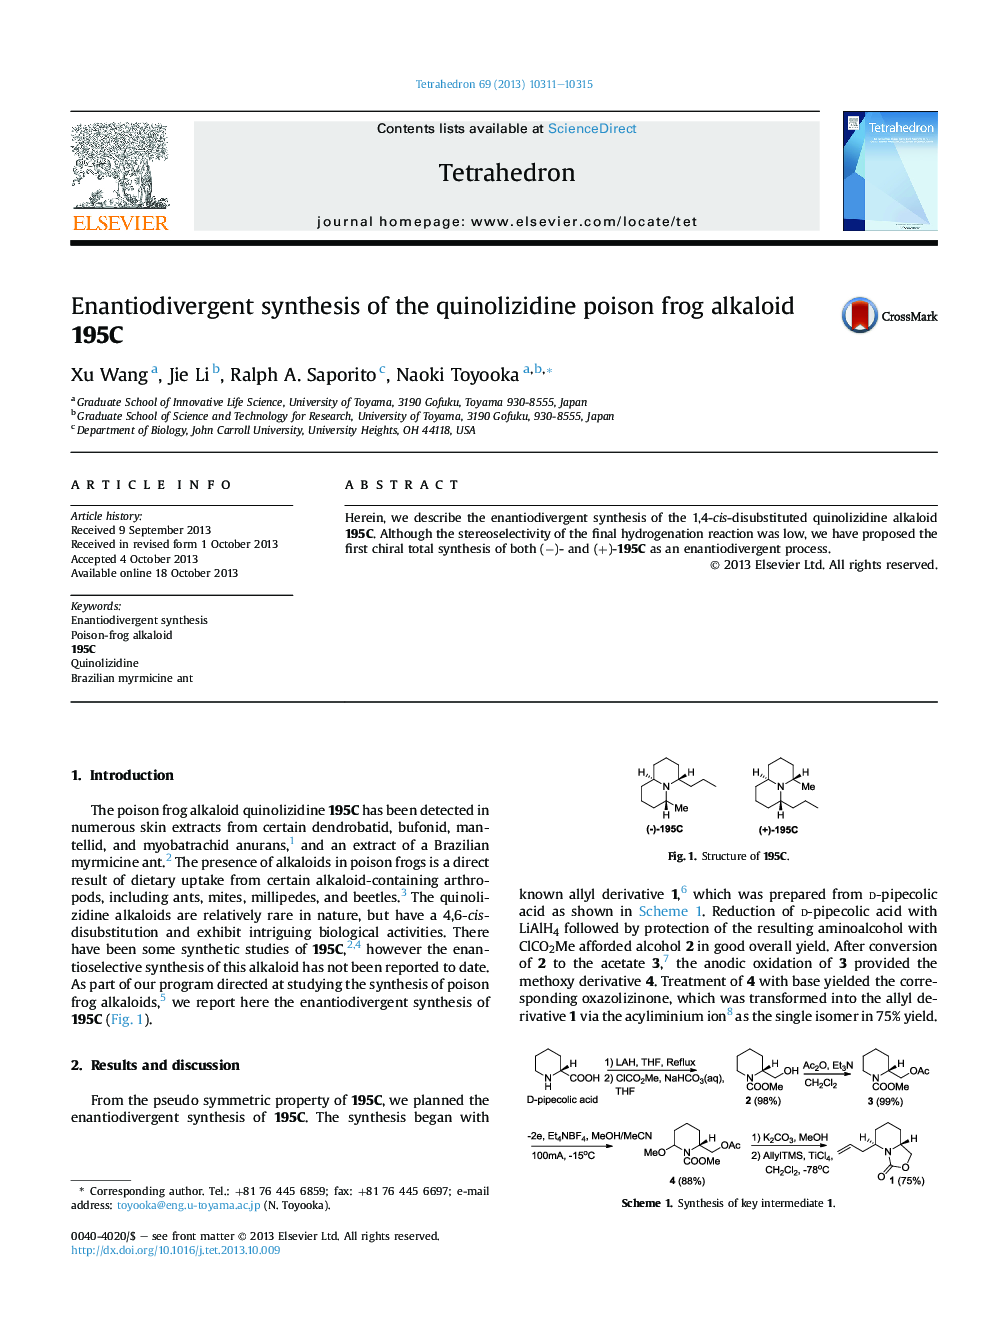 Enantiodivergent synthesis of the quinolizidine poison frog alkaloid 195C